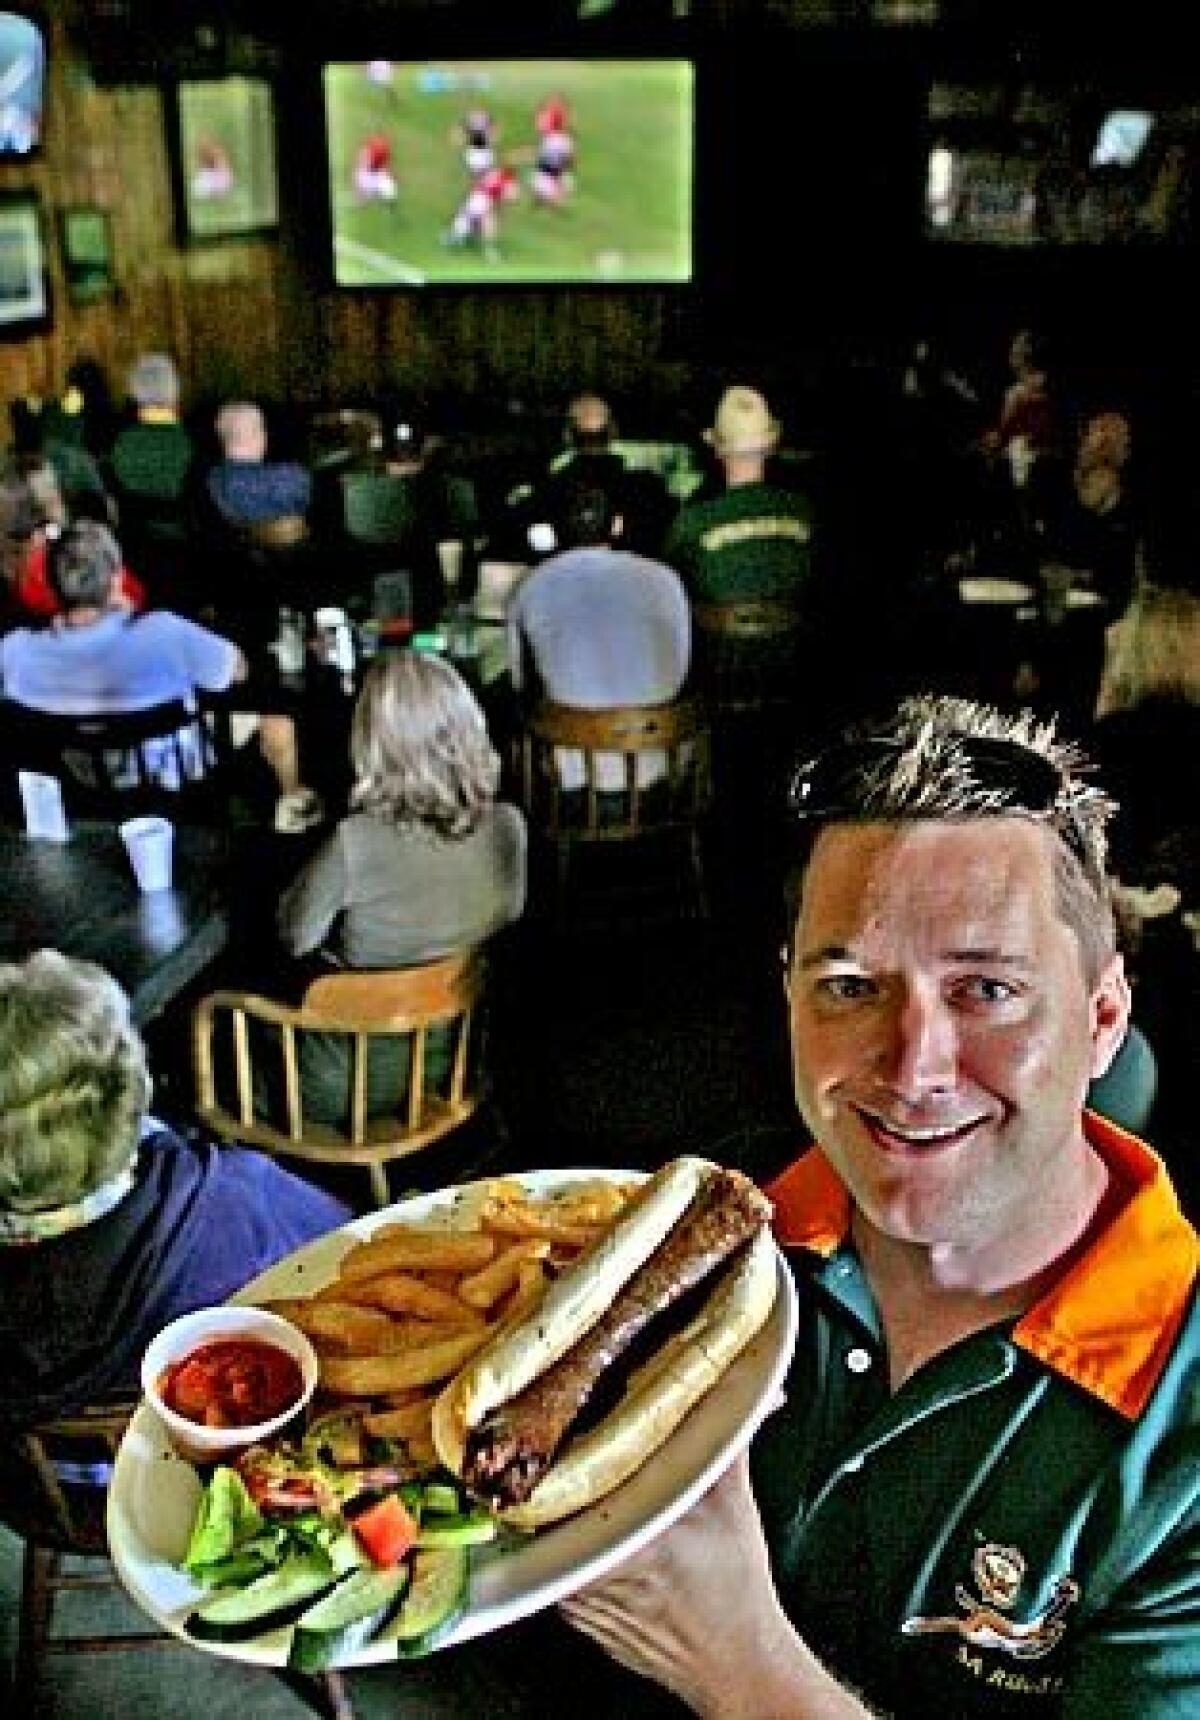 Springbok Bar & Grill owner Peter Walker displays his restaurants farmers sausage dish.